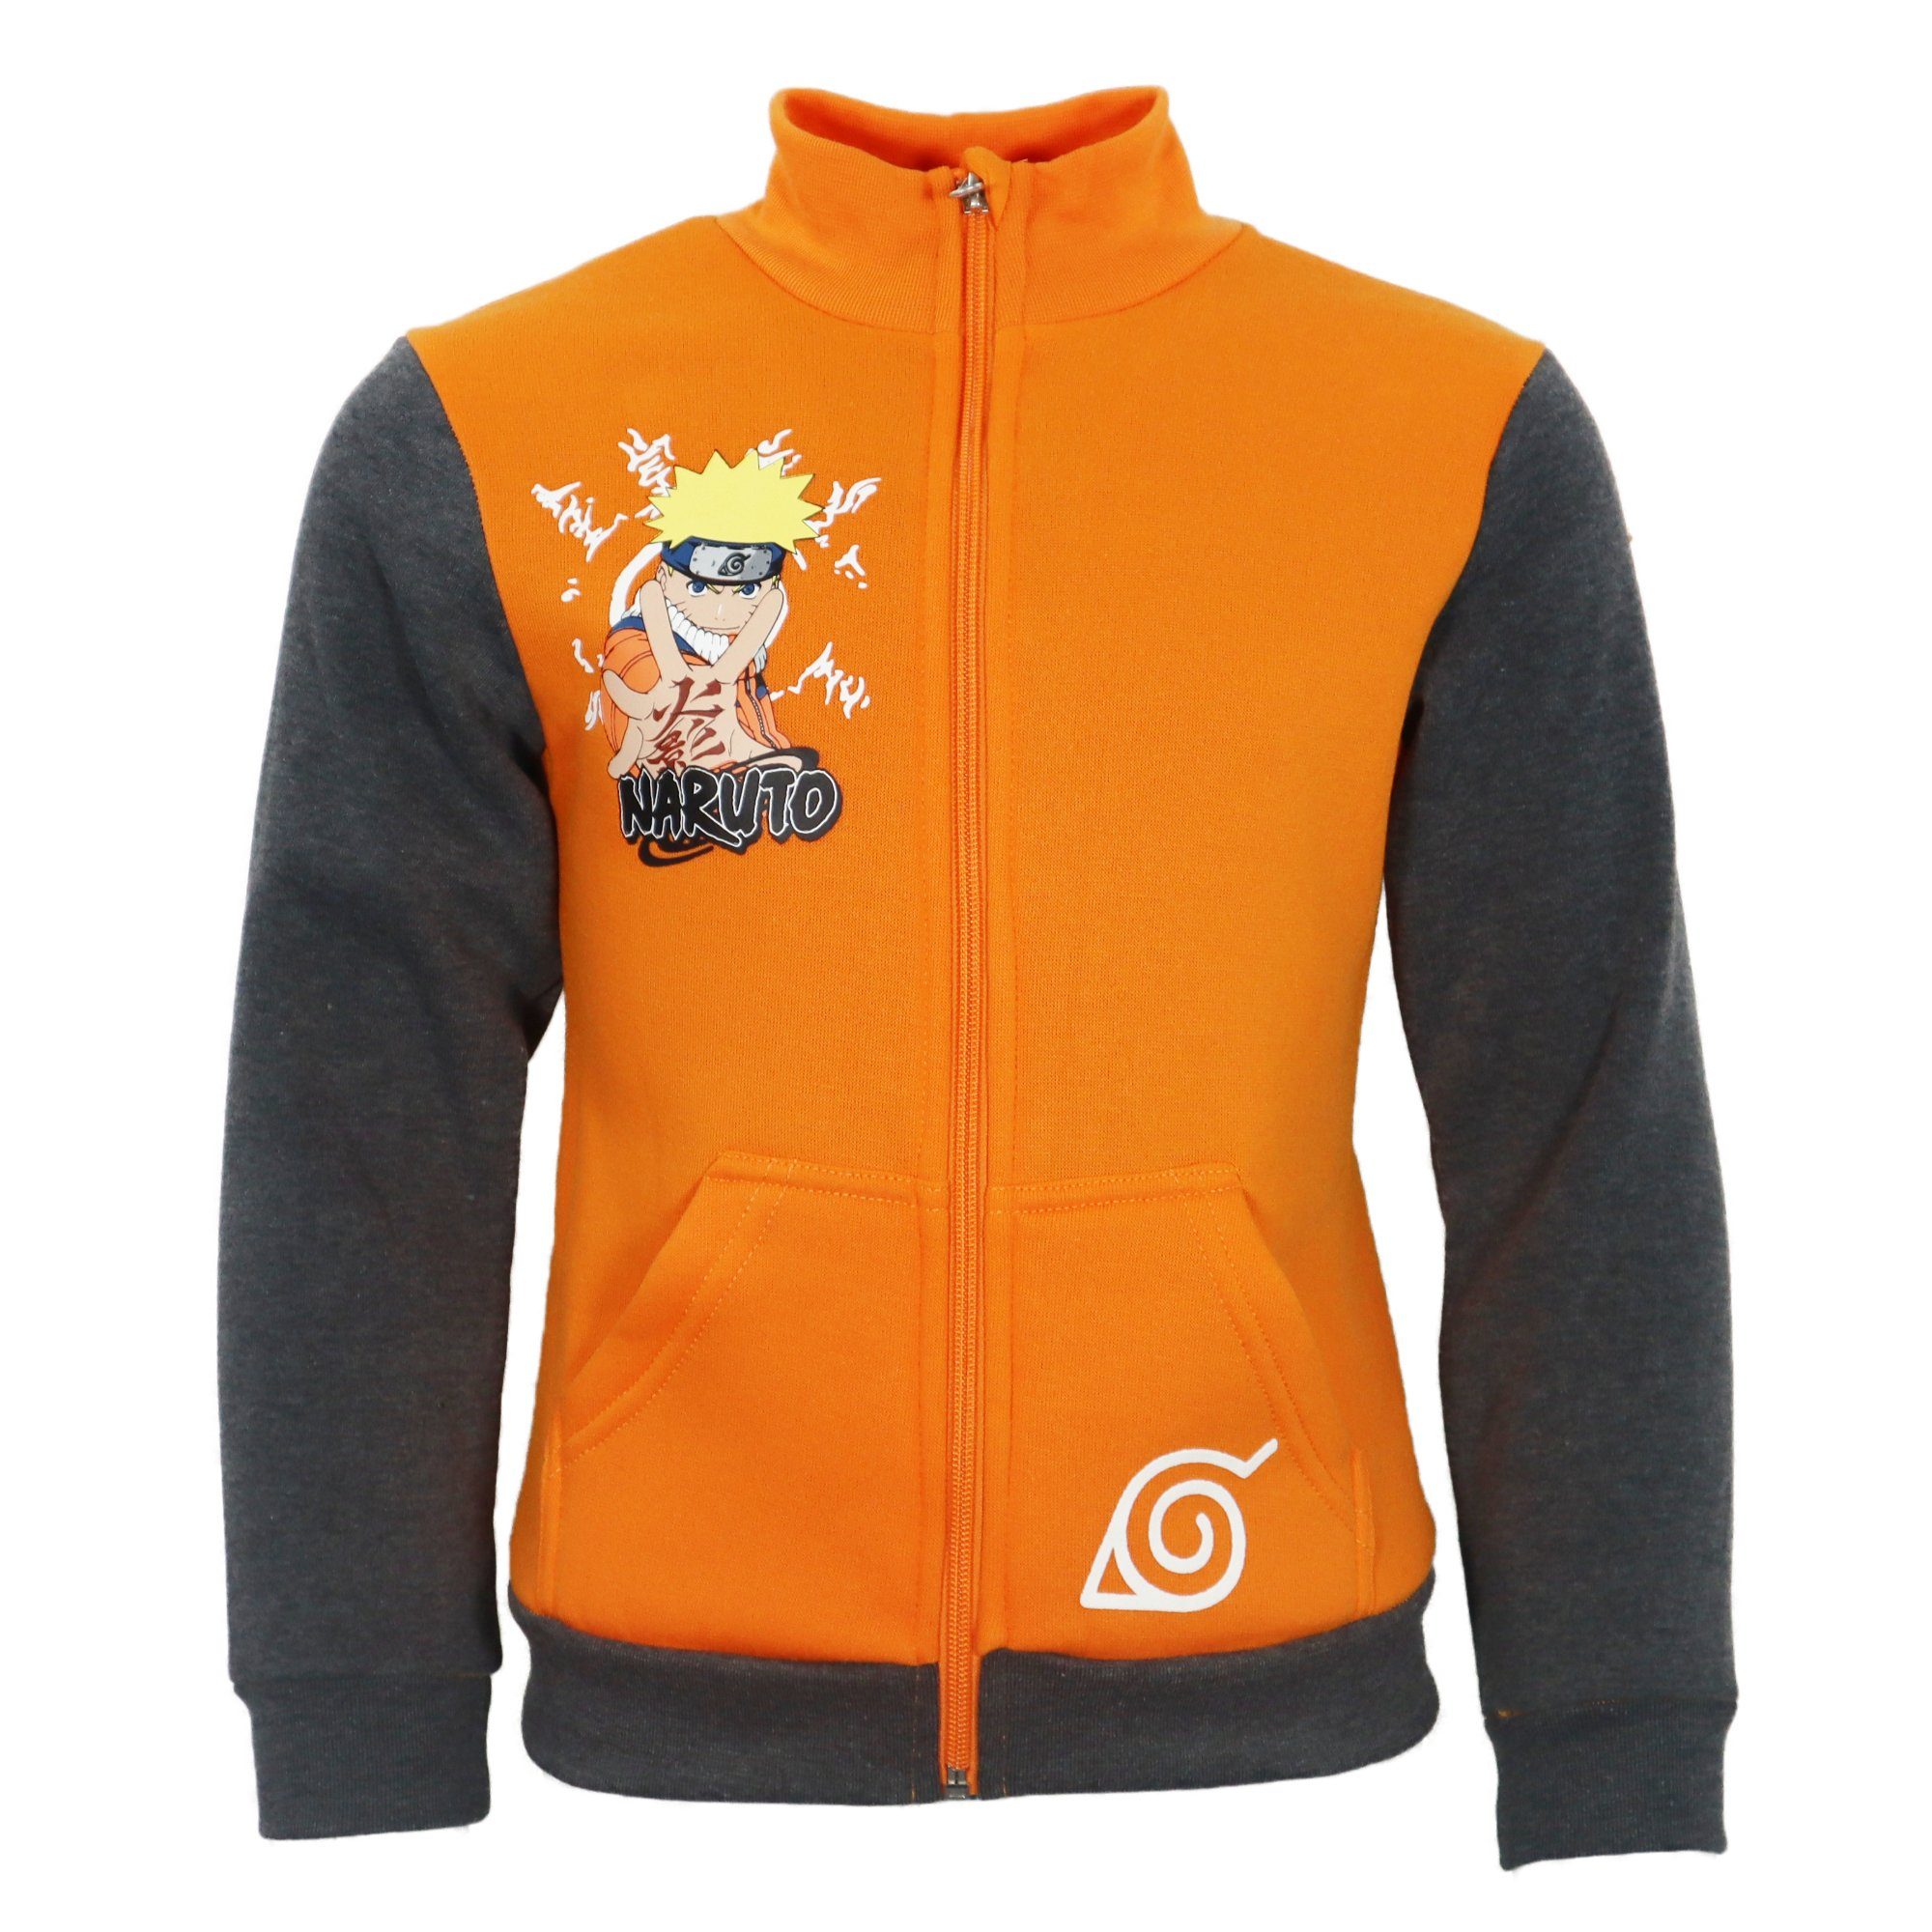 Orange Gr. Sweater Sporthose 140 98 bis Jacke, Hose Jogginganzug Naruto Joggingset Naruto Shippuden